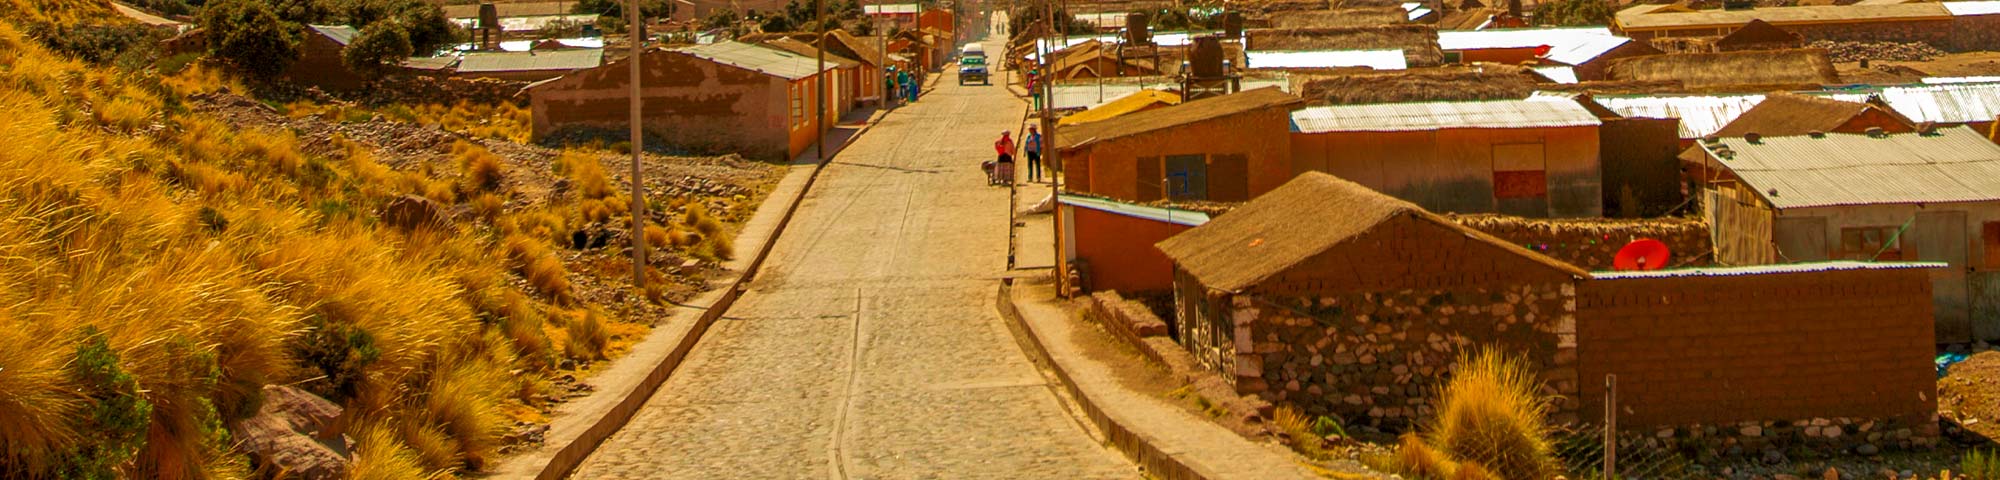  Arequipa: realizan restauración de casitas vivenciales turísticas de Sibayo